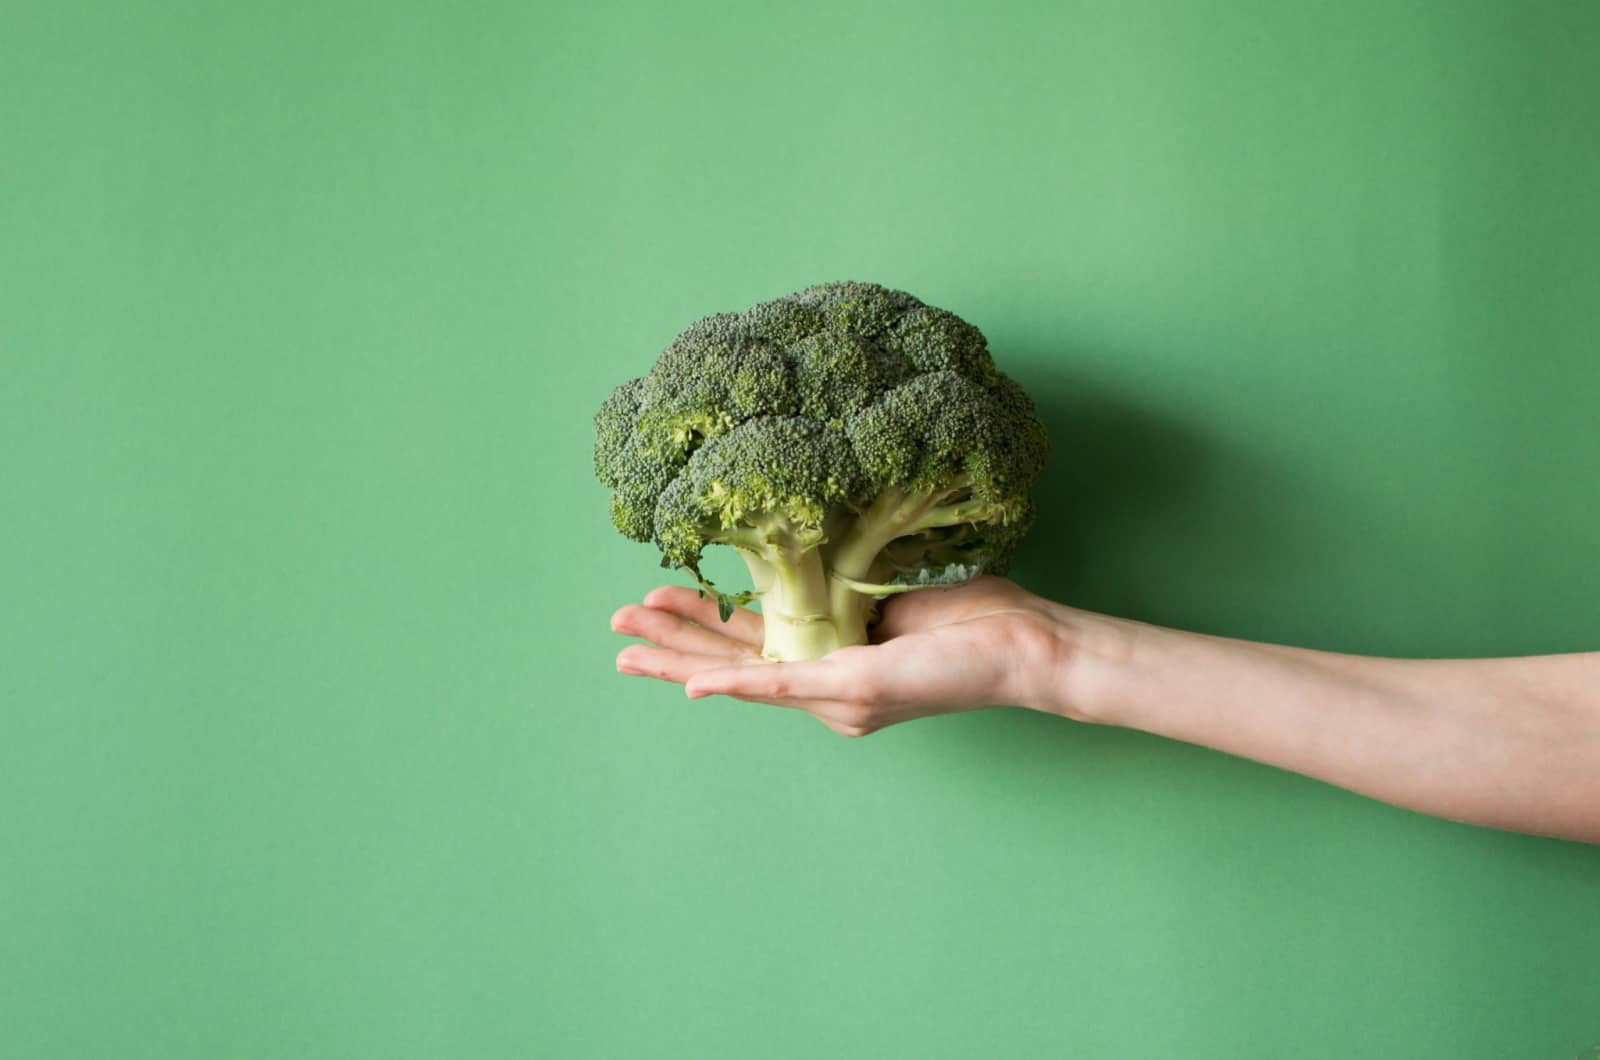 hand holding broccoli